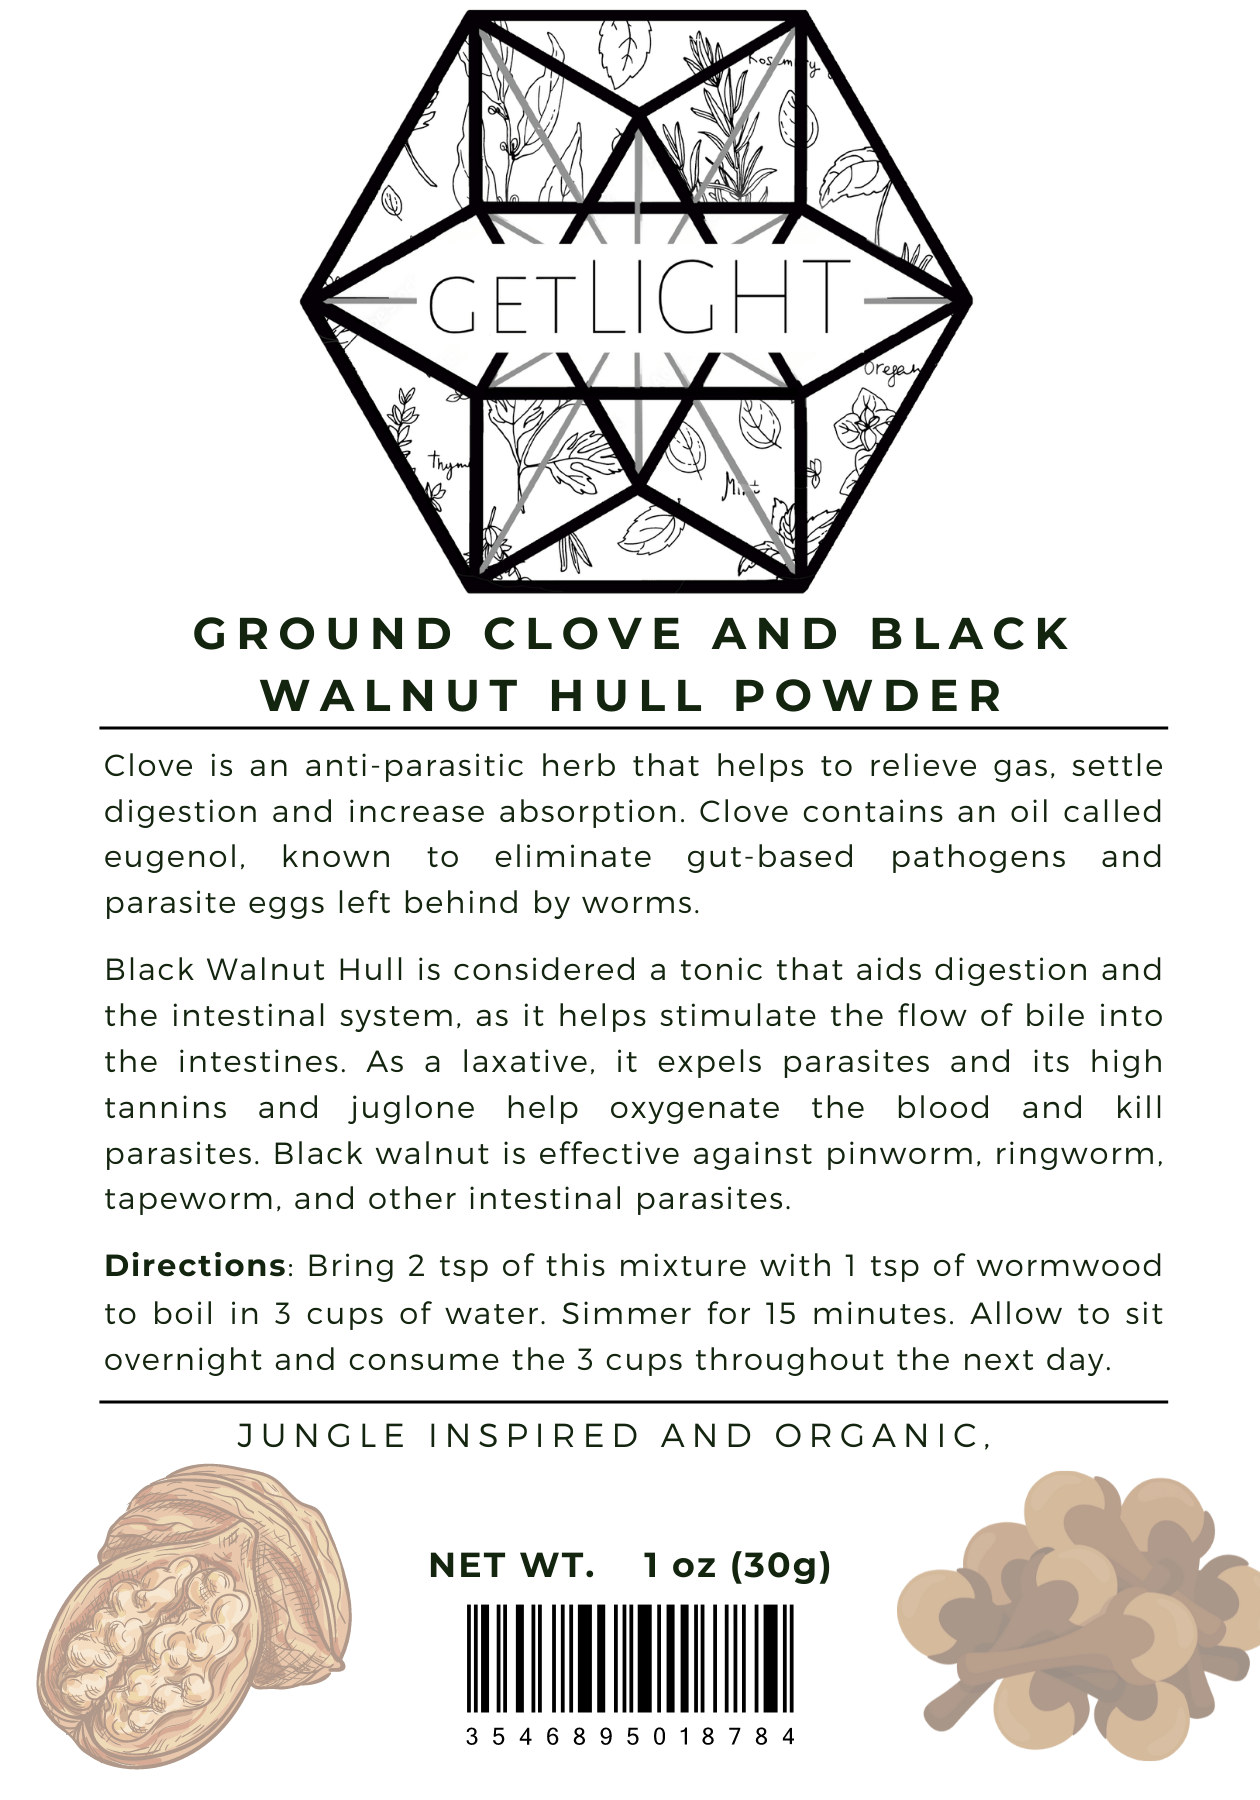 Ground Clove and Black Walnut Hull Benefits